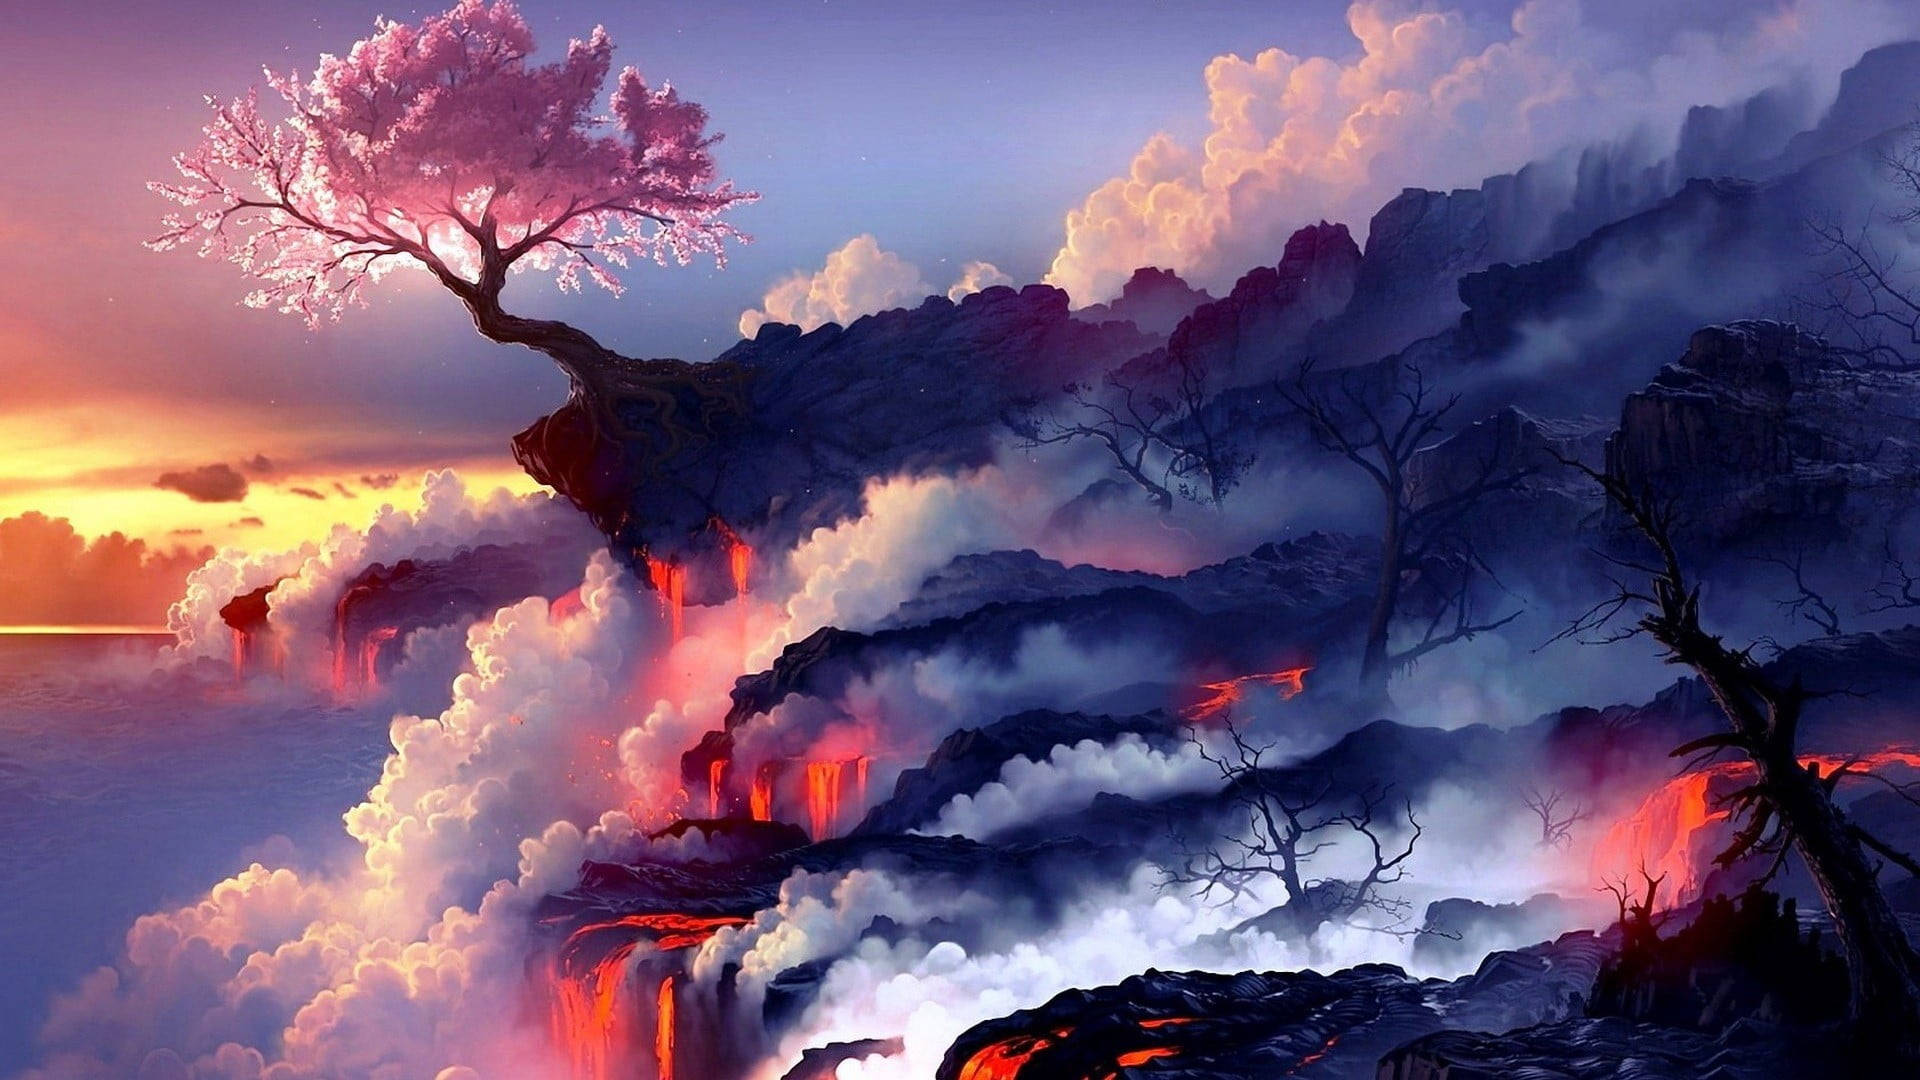 Fire Waterfall Digital Art Background